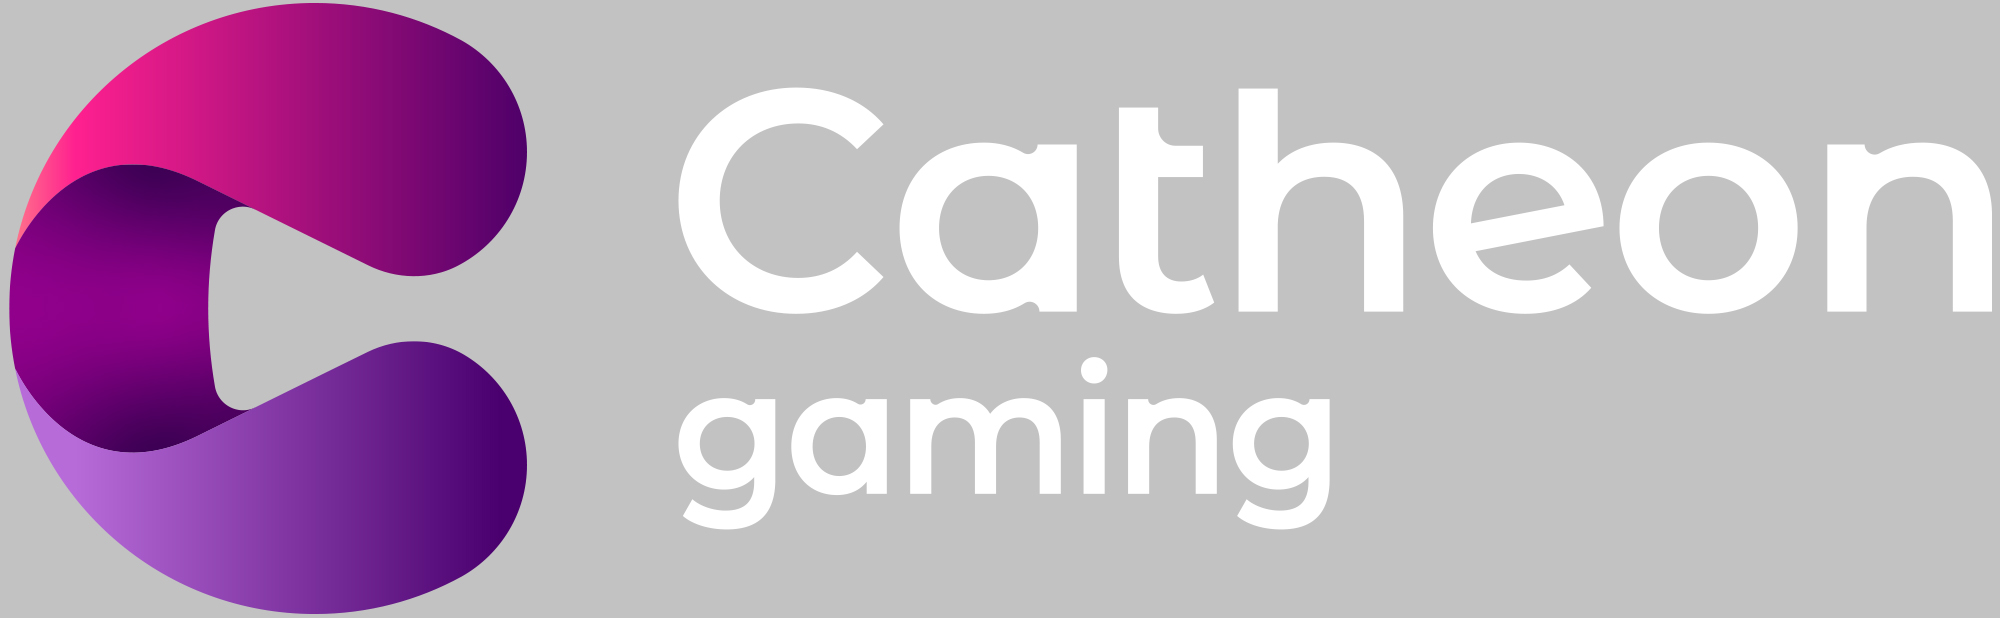 Catheon Gaming